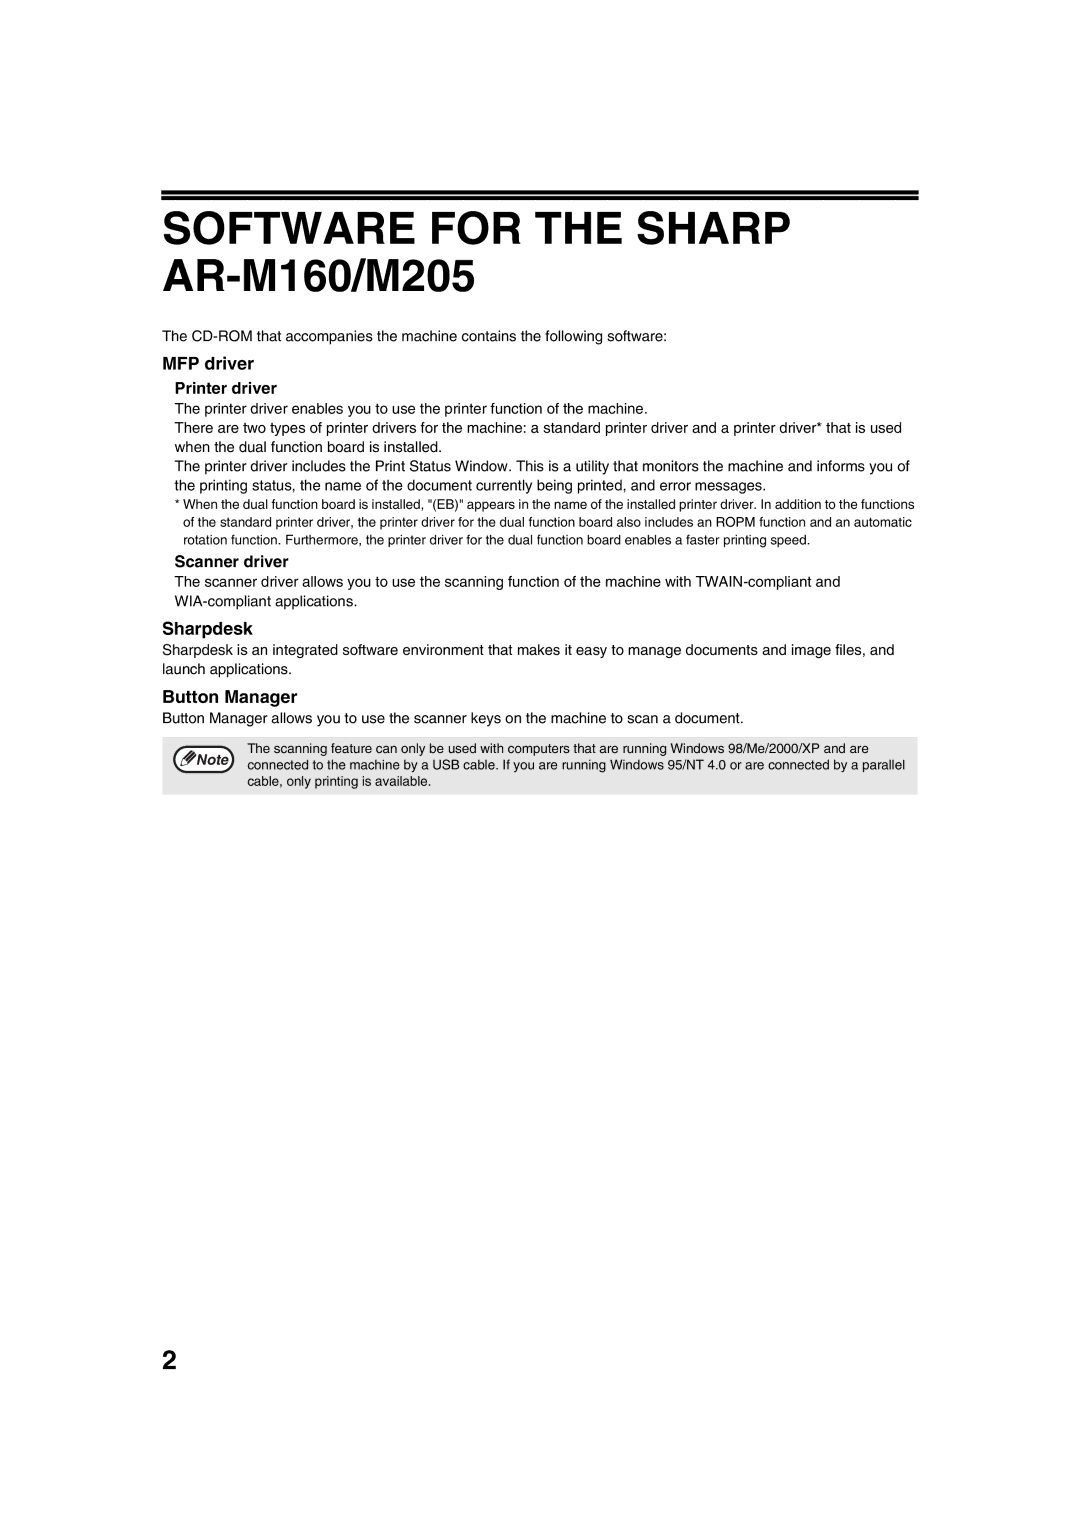 Sharp AR-M205 setup guide Software for the Sharp AR-M160/M205, MFP driver, Sharpdesk, Button Manager 